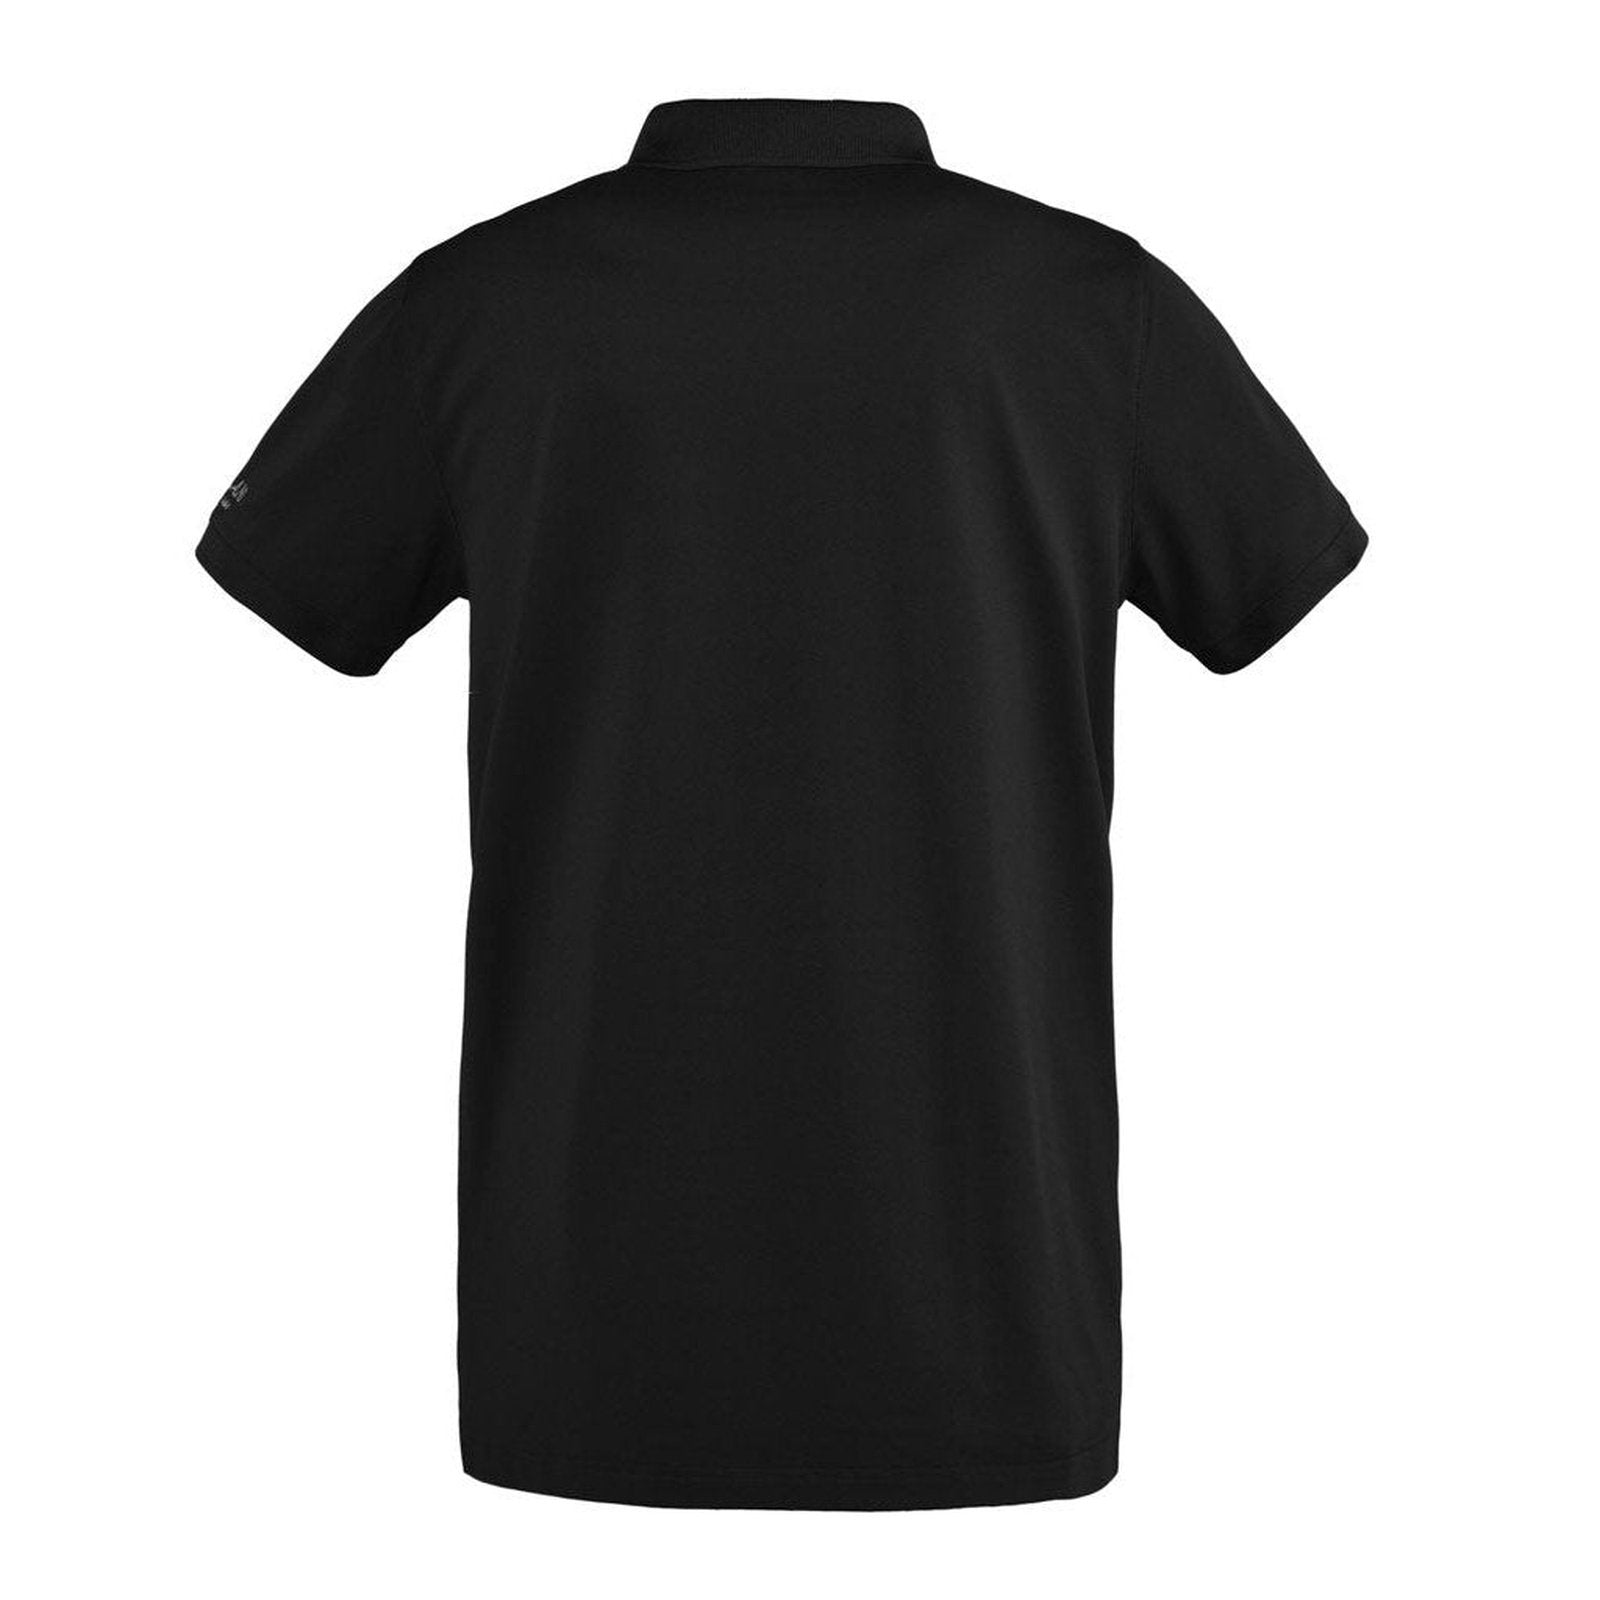 Kingsland Classic Herren Polo-Pique Shirt in schwarz & blau bei SP-Reitsport Kingsland bei SP-Reitsport